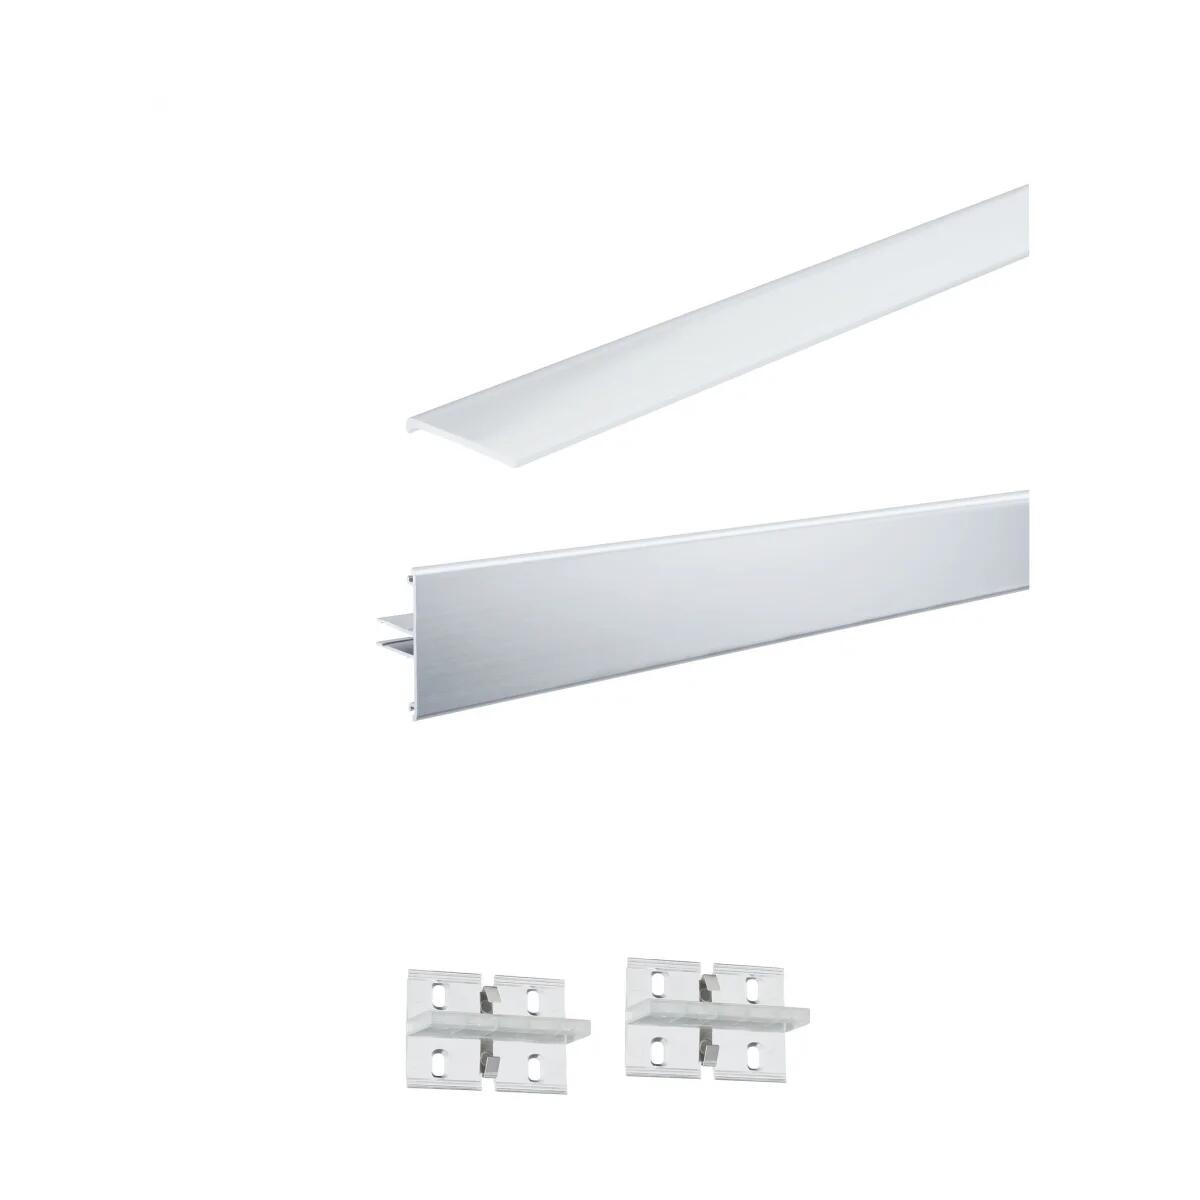 Paulmann LED Strip Profil Duo 1m, alu eloxiert (70520) Elektroshop Wagner | LED-Stripes